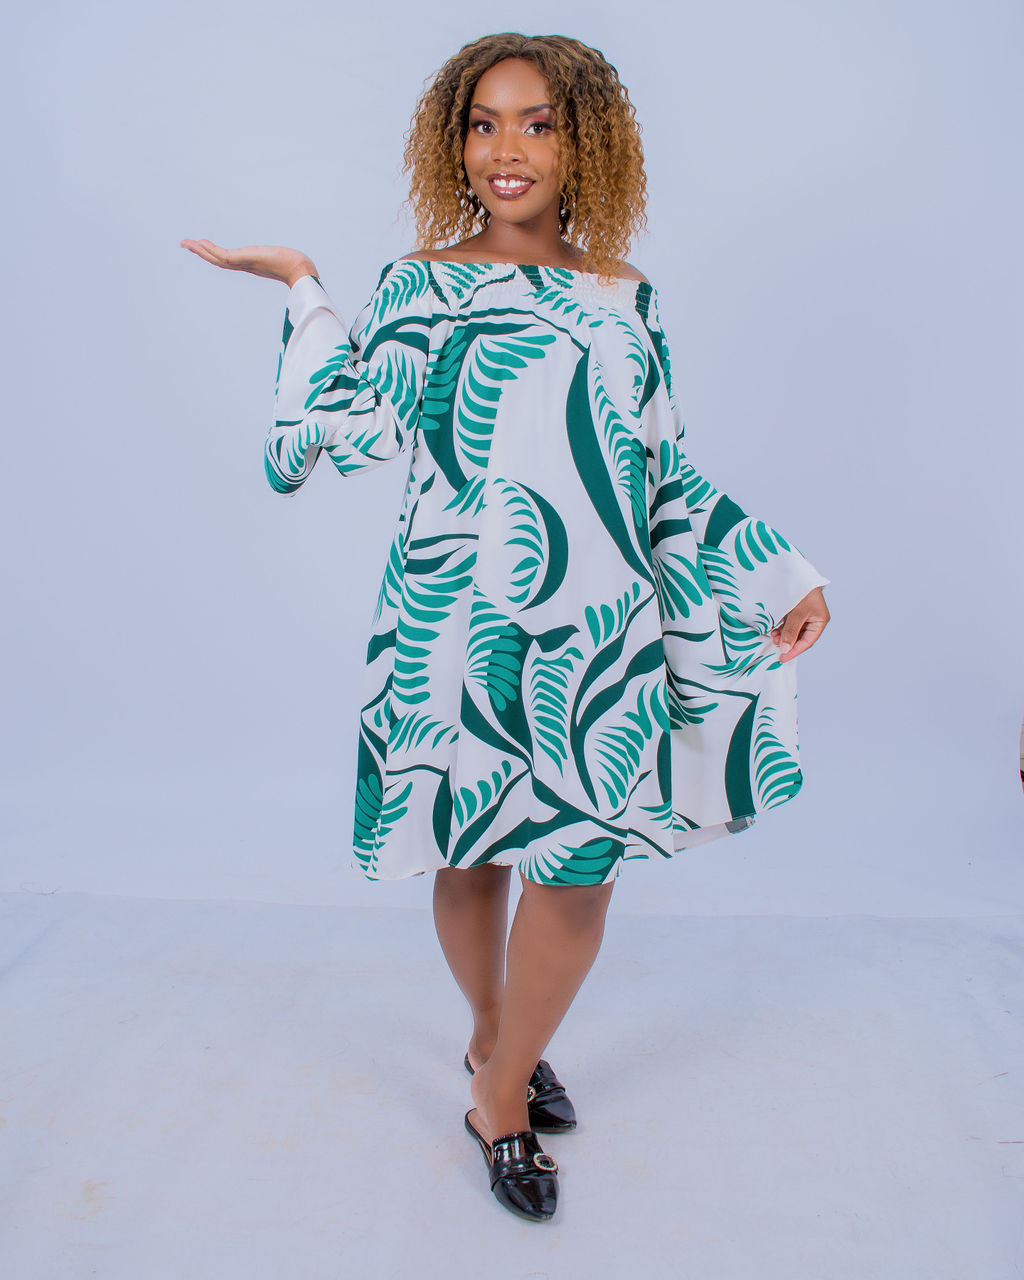 PATCHWORK African Printed Fabric Sleeveless Midi Dress 100% Wax Cotton  Handmade UK 